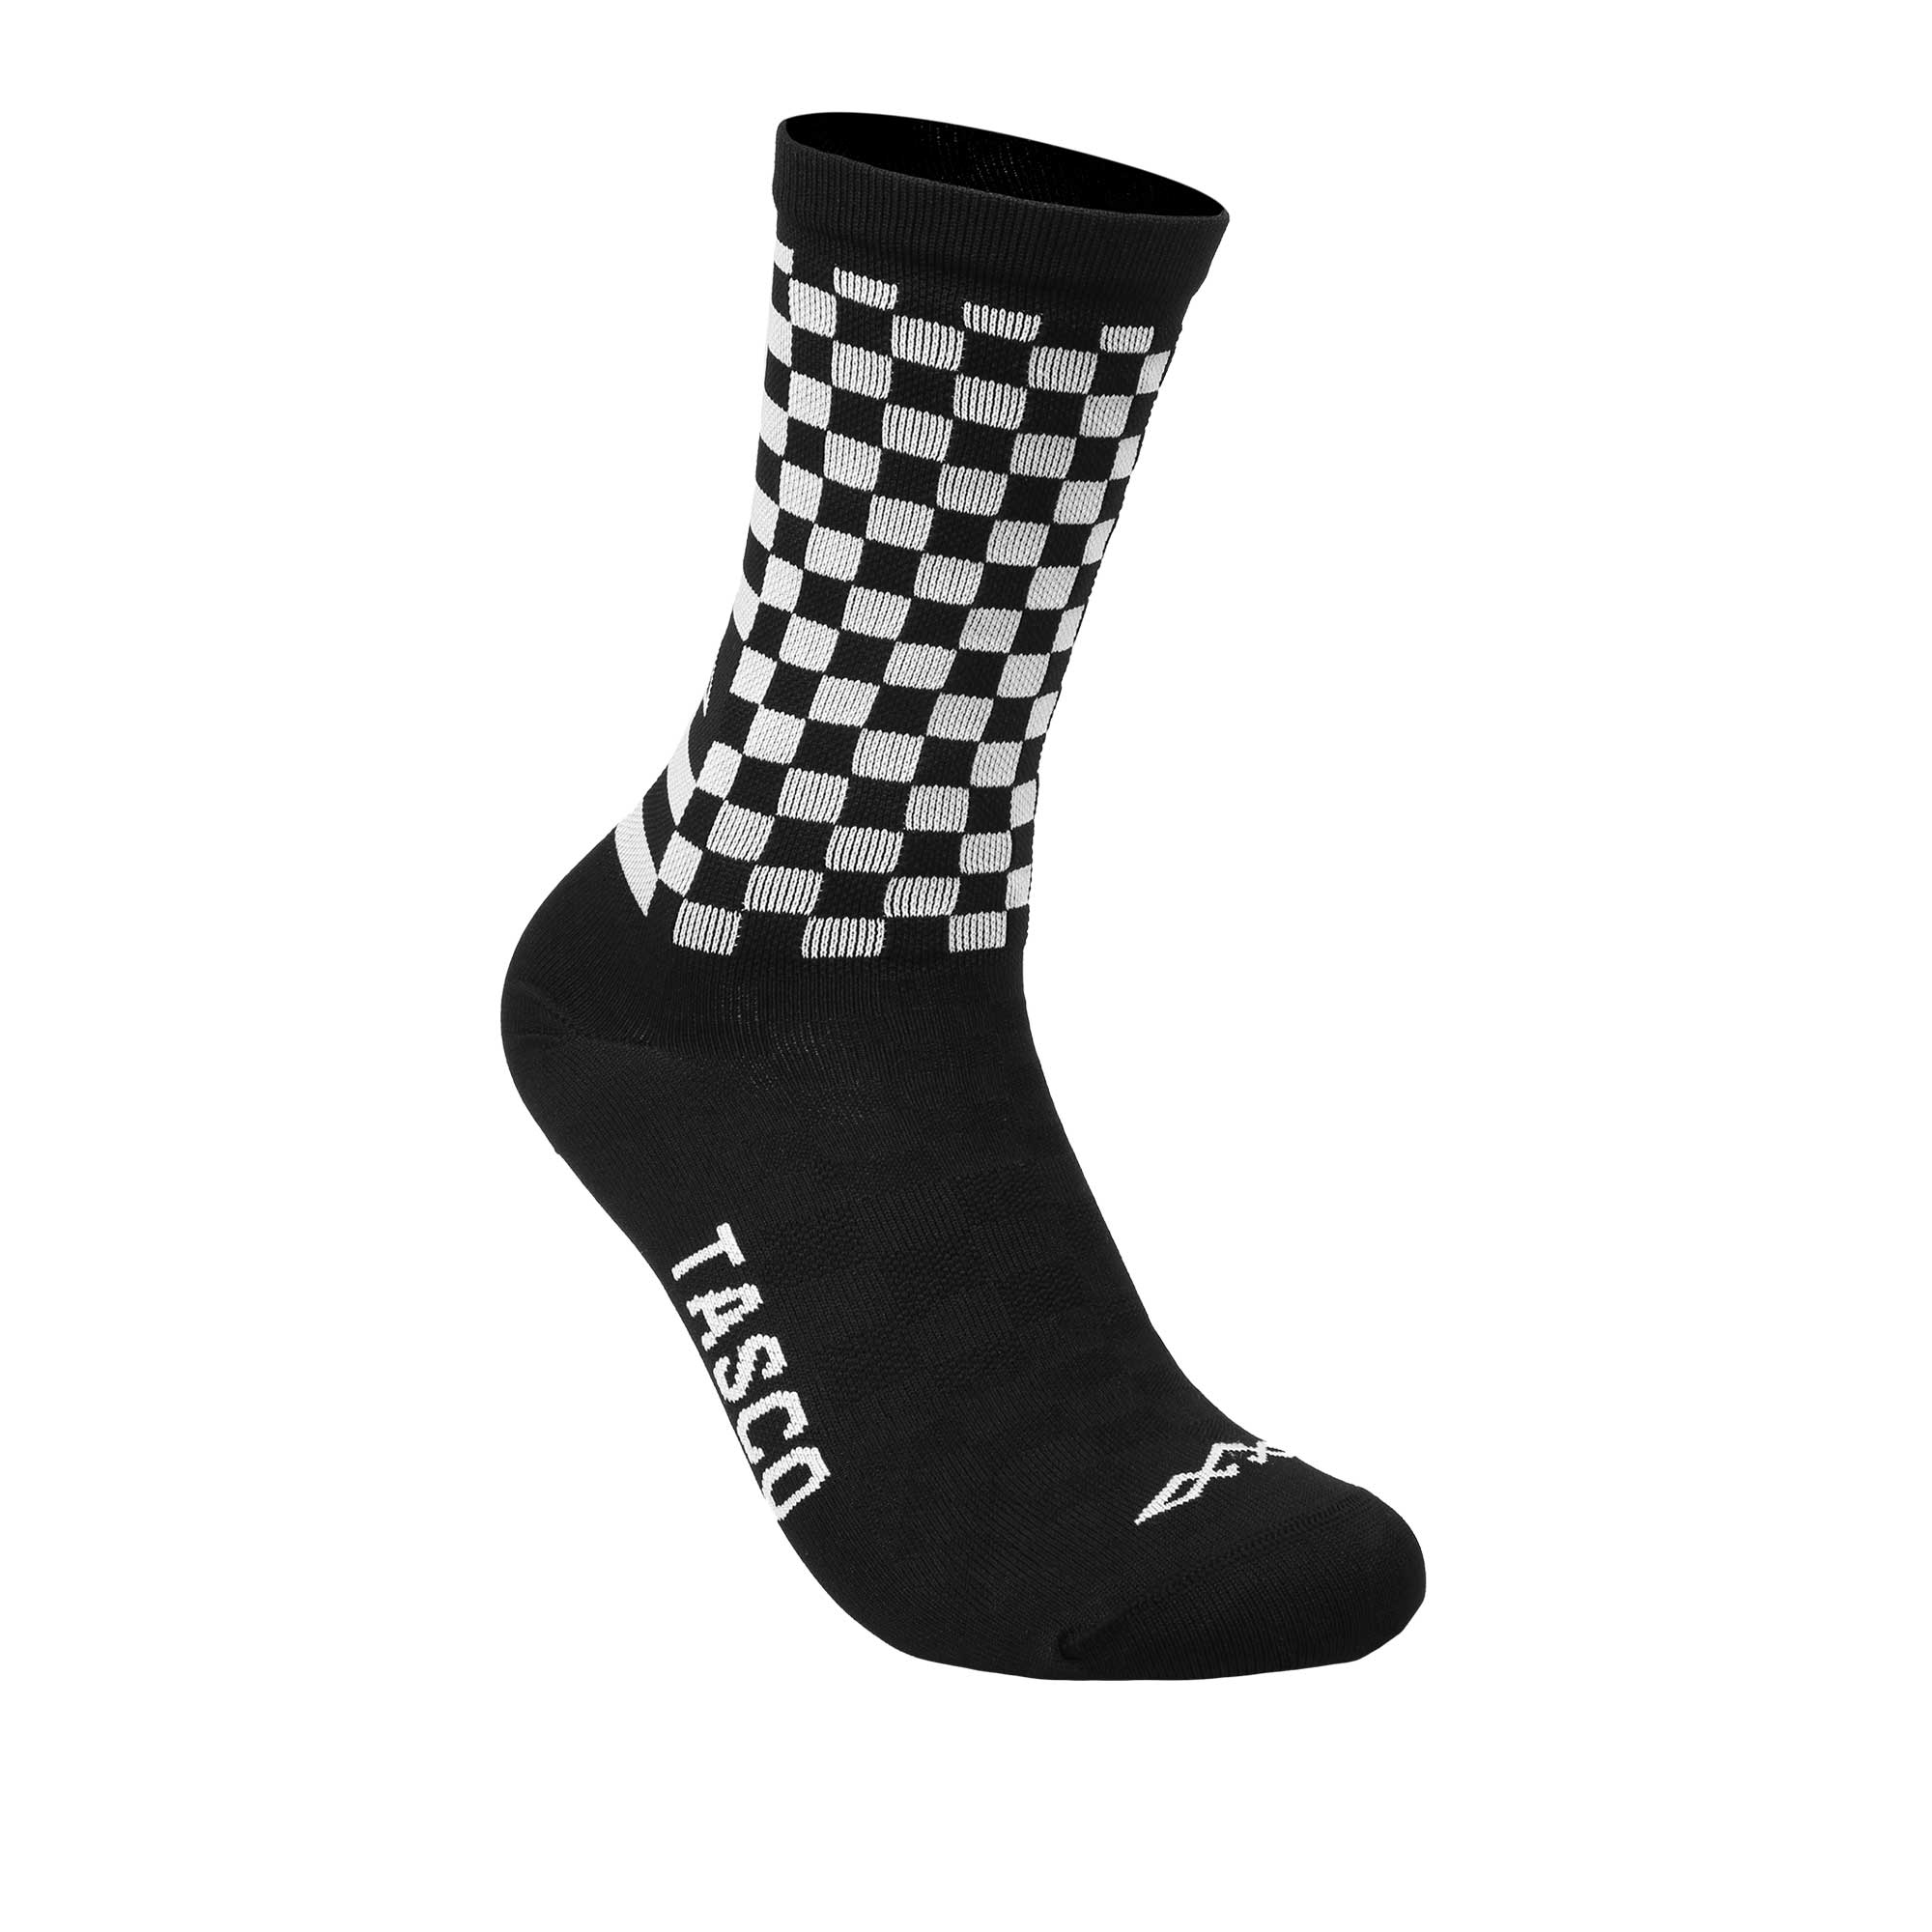 Checkmate-socks-main.jpg